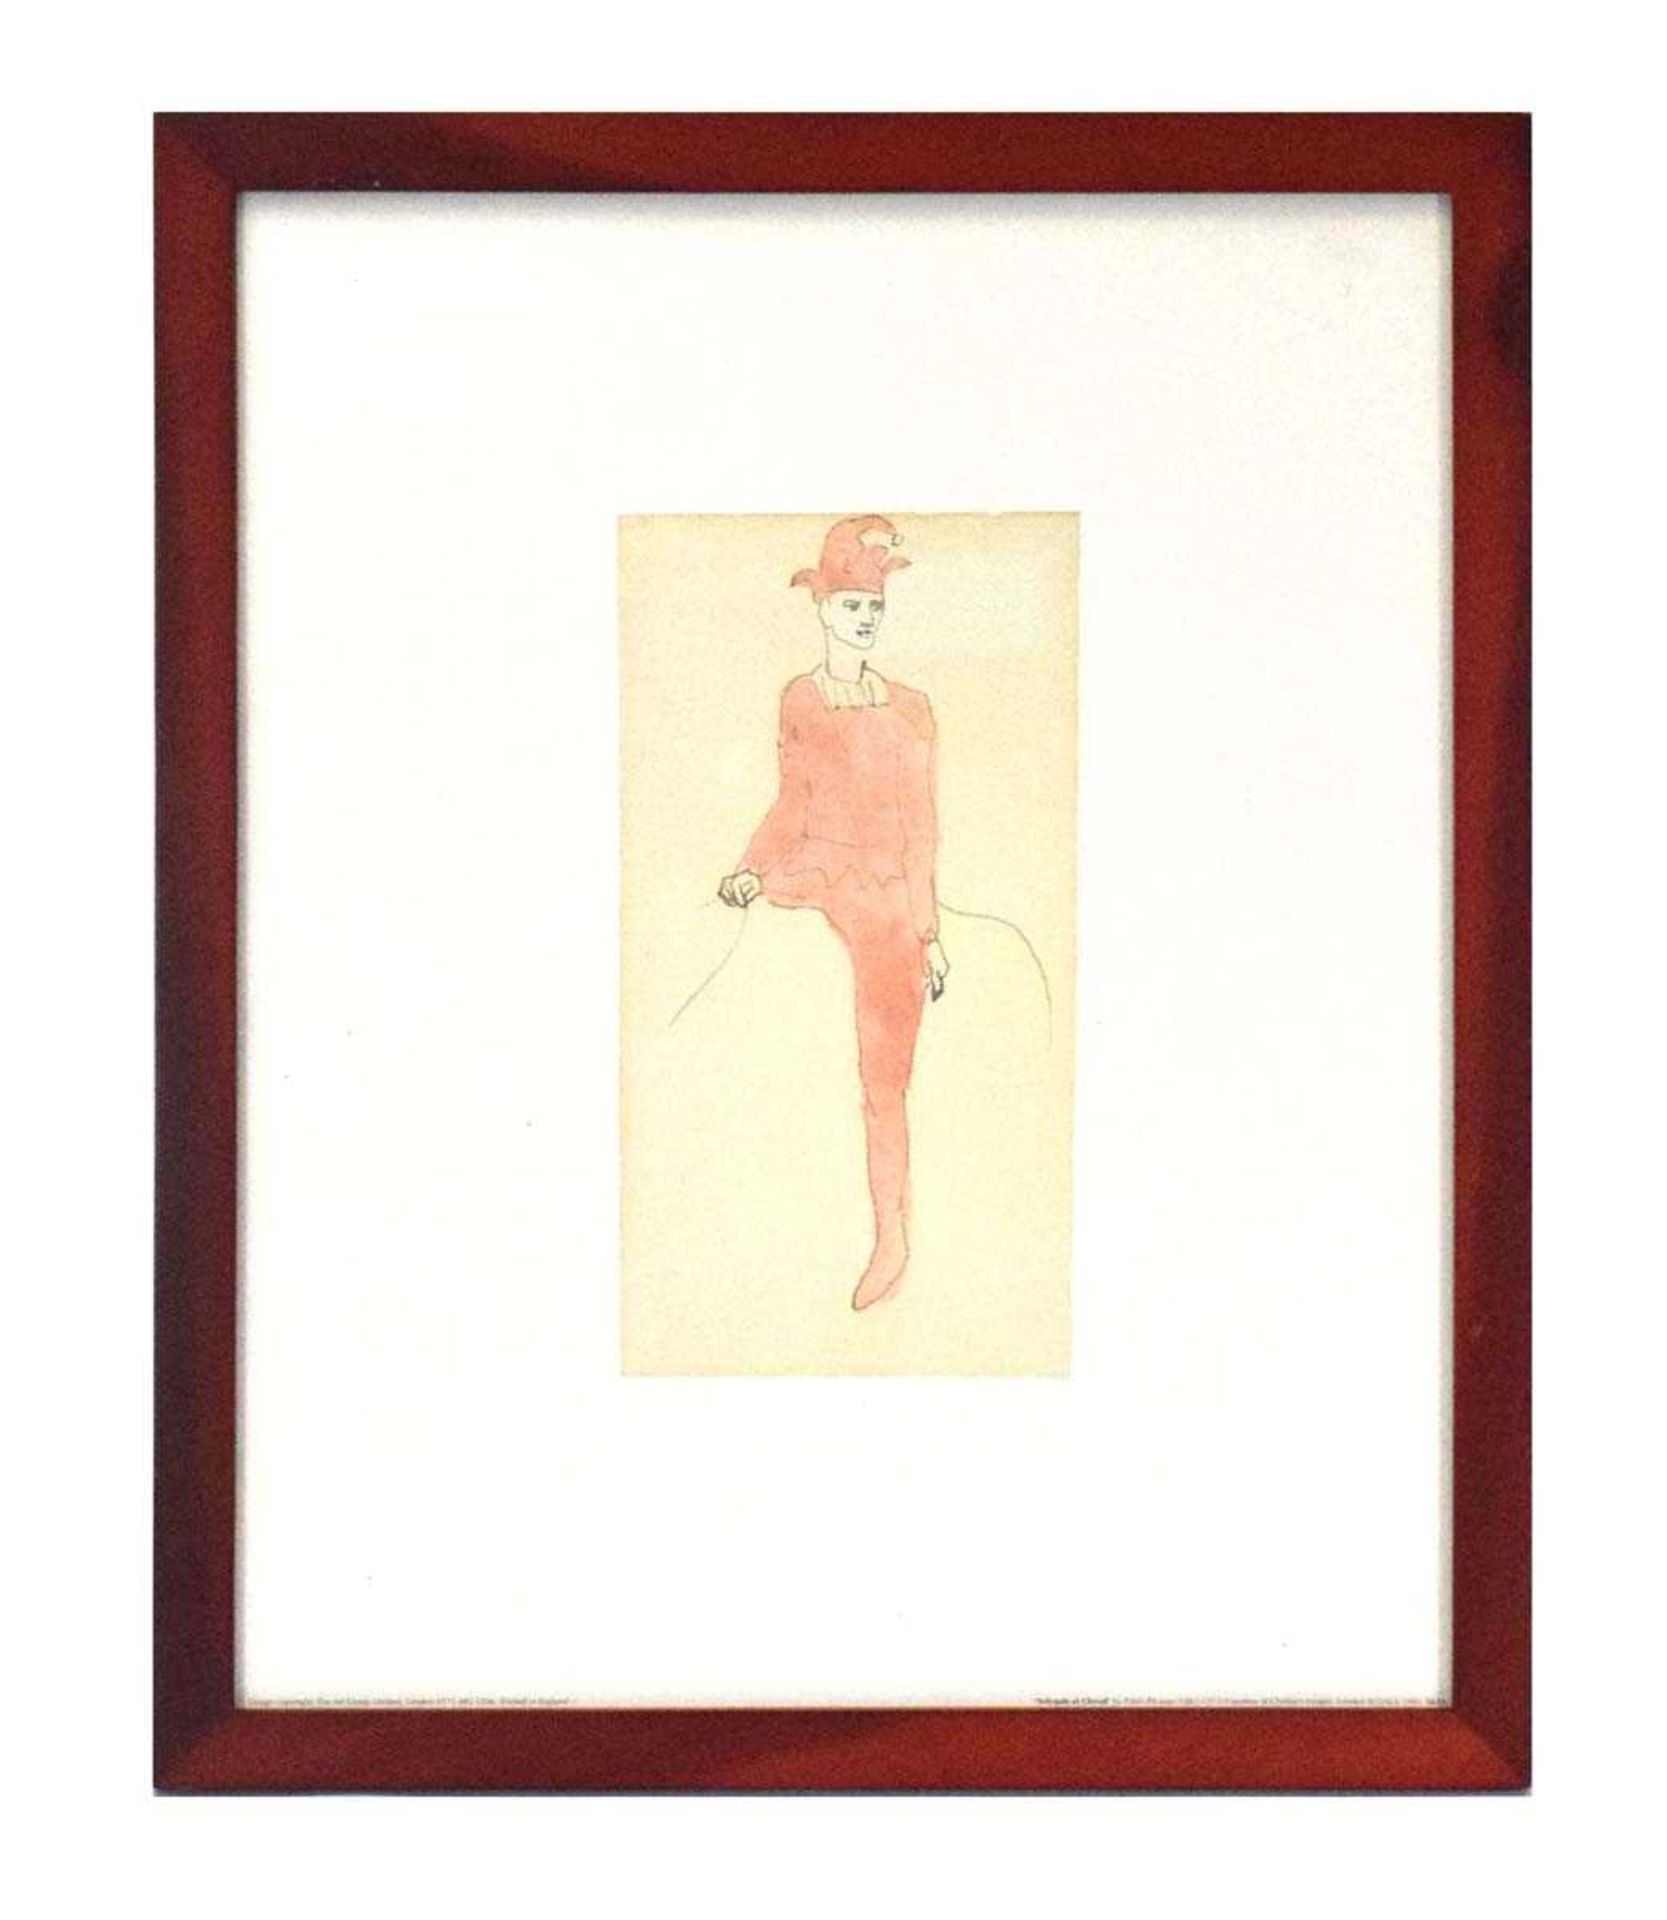 After Pablo Picasso (1881-1973),'Arlequin et Cheval',1995 coloured reproduction, image 11 x 15 cm